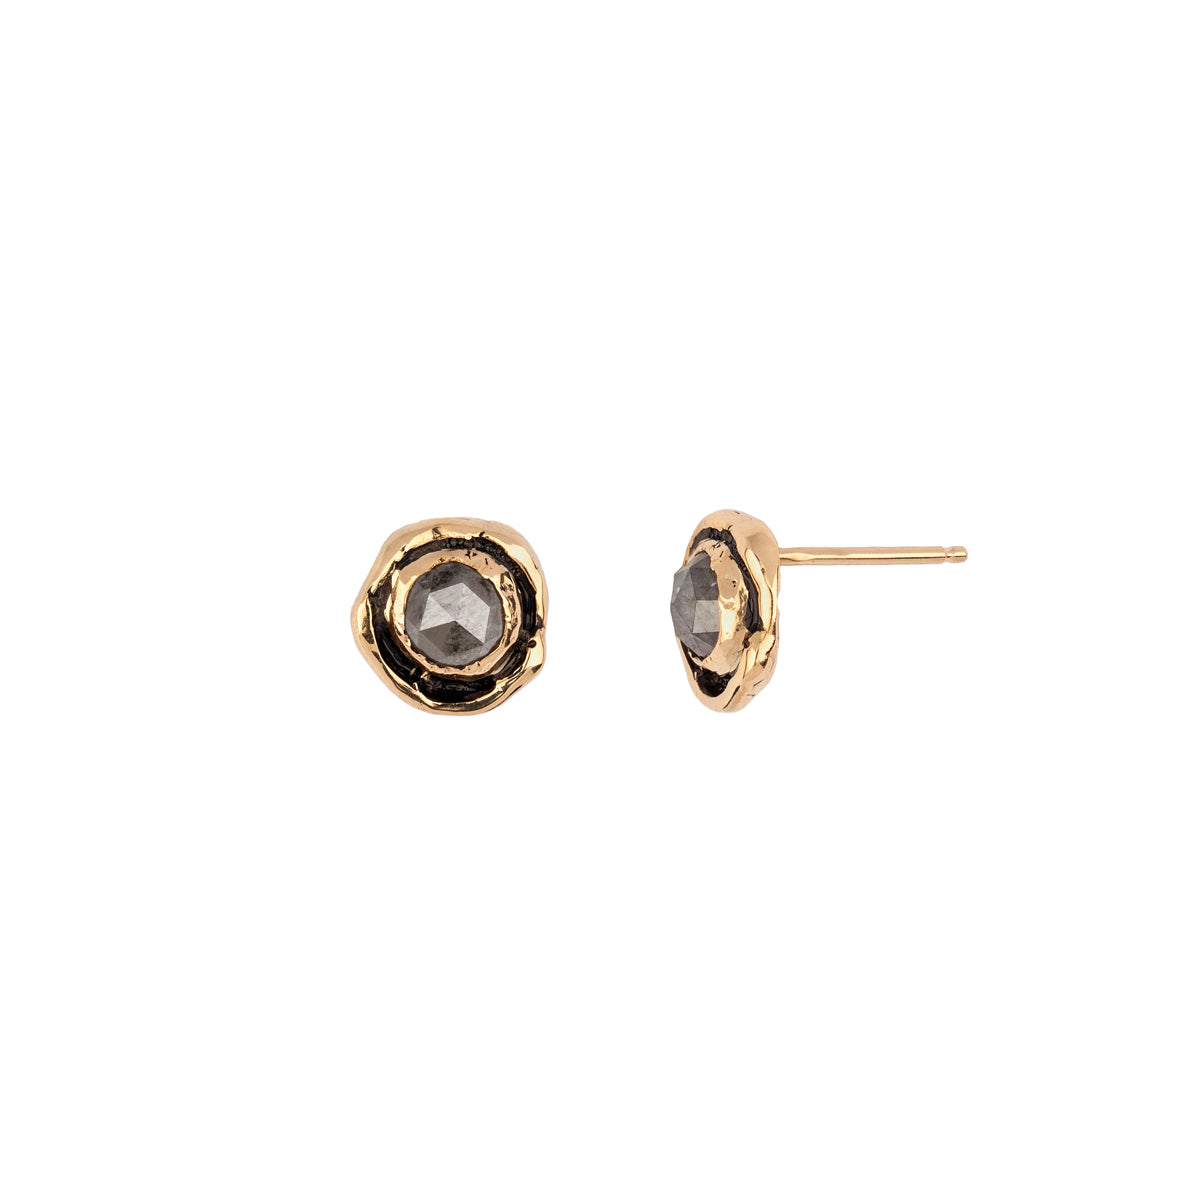 A set of 14k gold stud earrings featuring Grey Rustic Diamonds.